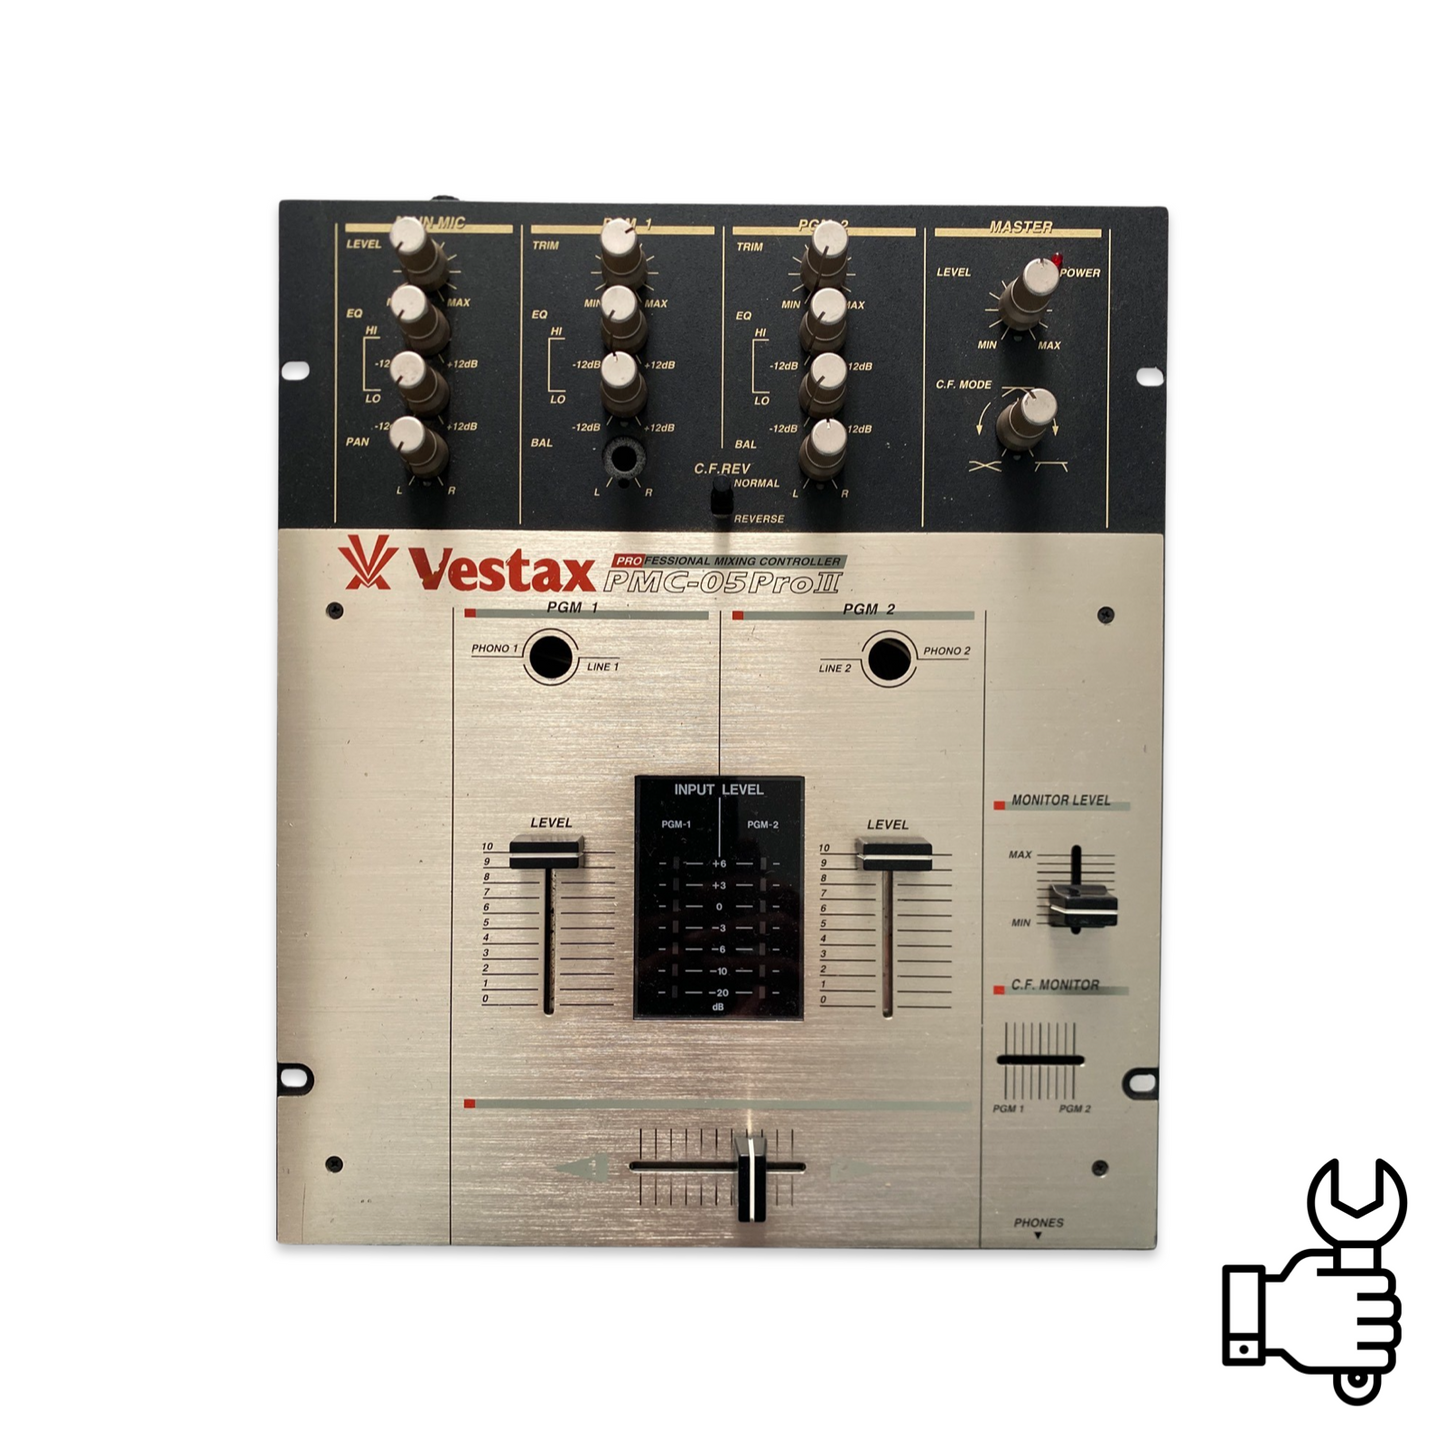 Mail-in Service Vestax PMC-05 Series